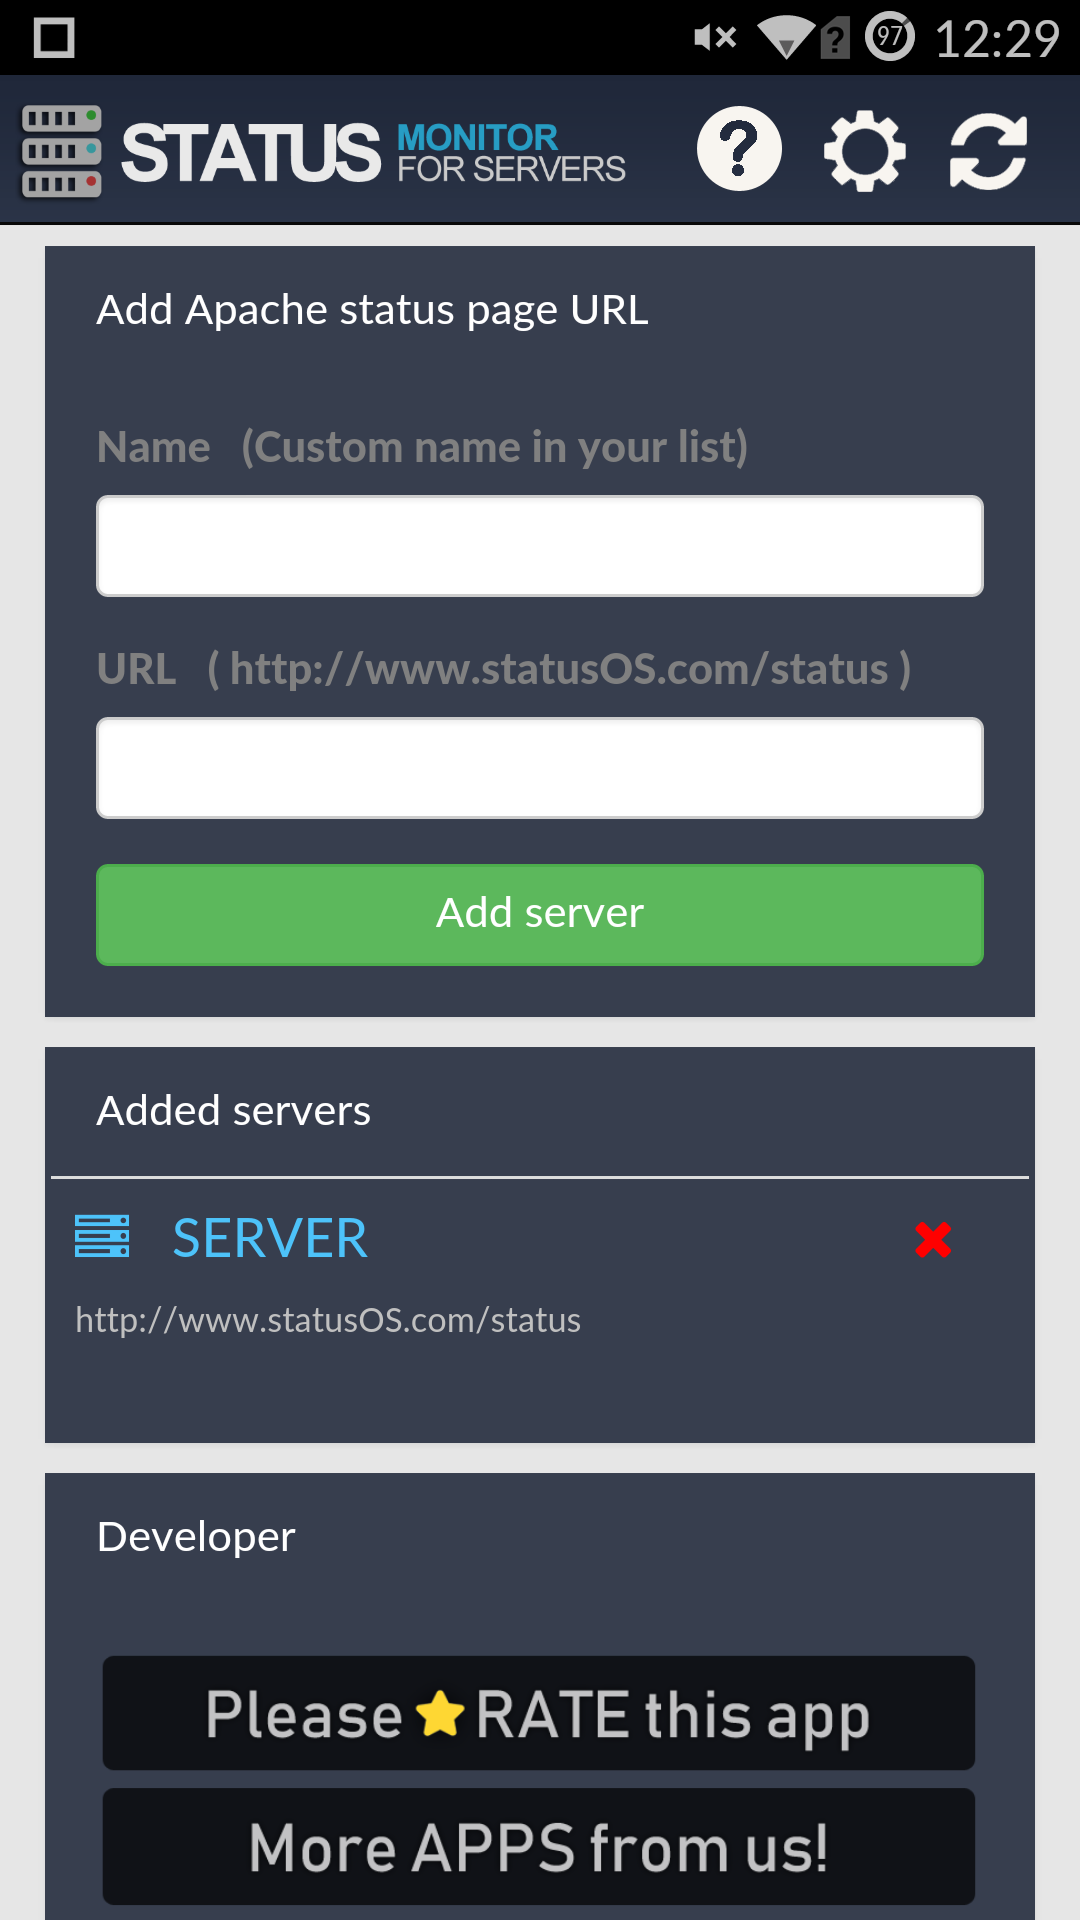 Status Monitor 4 Apache servers